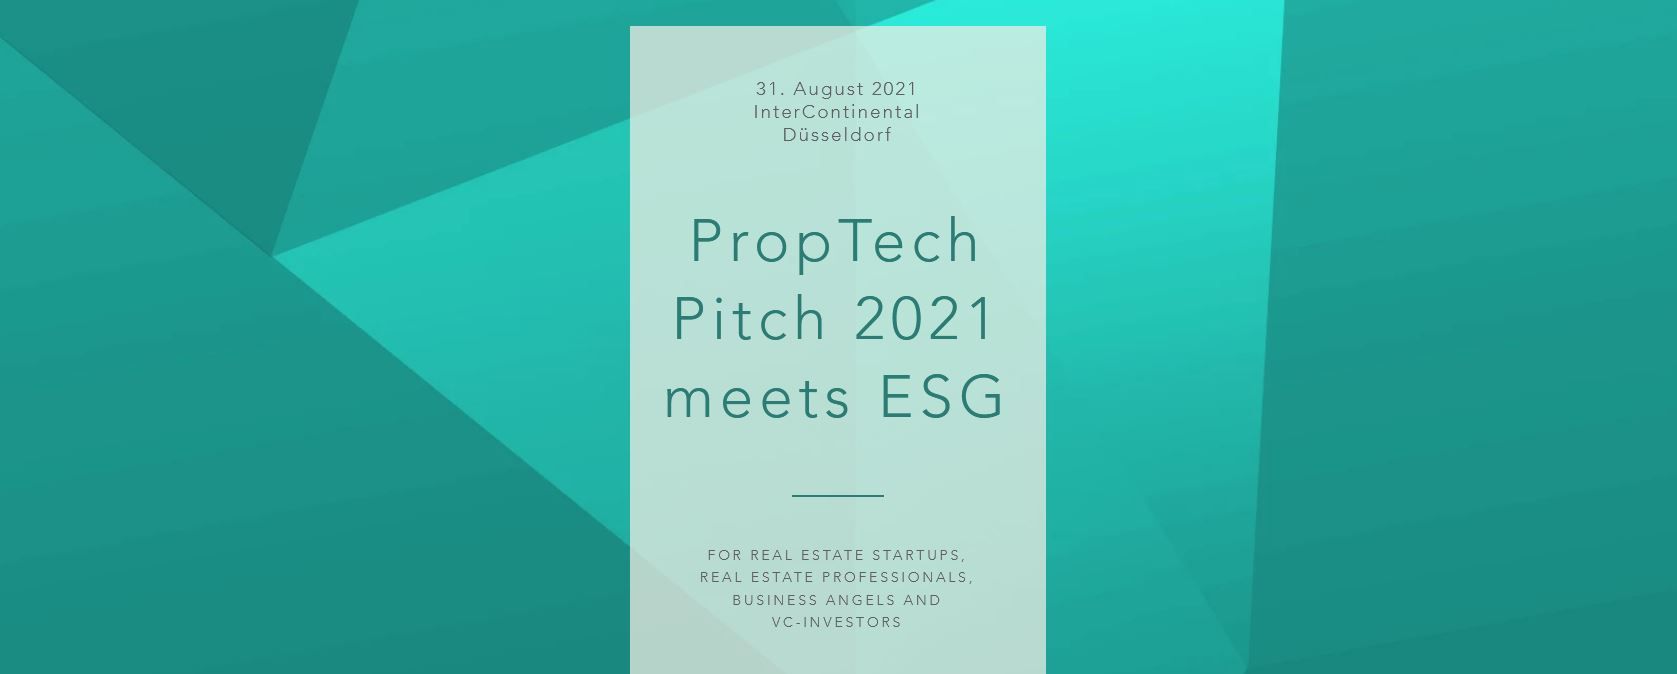 PropTech-Pitch meets ESG